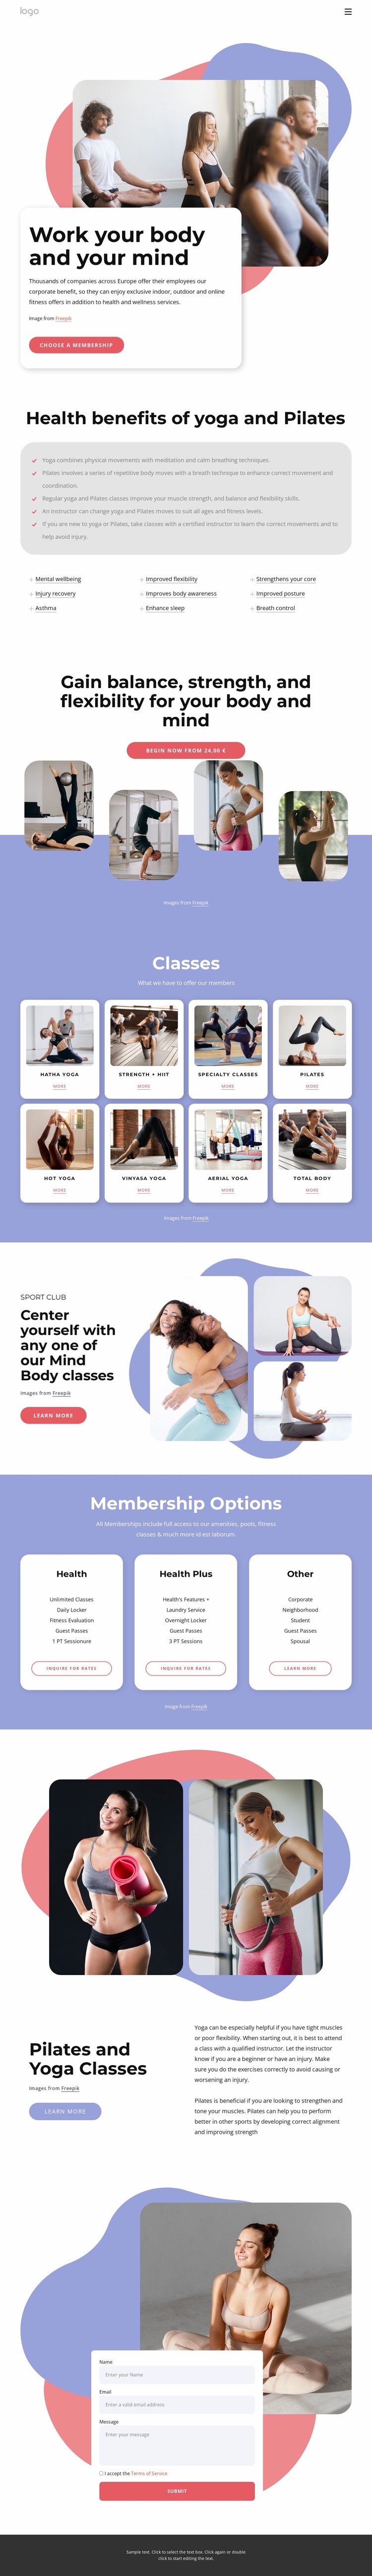 Pilates and yoga classes Ecommerce Website Design